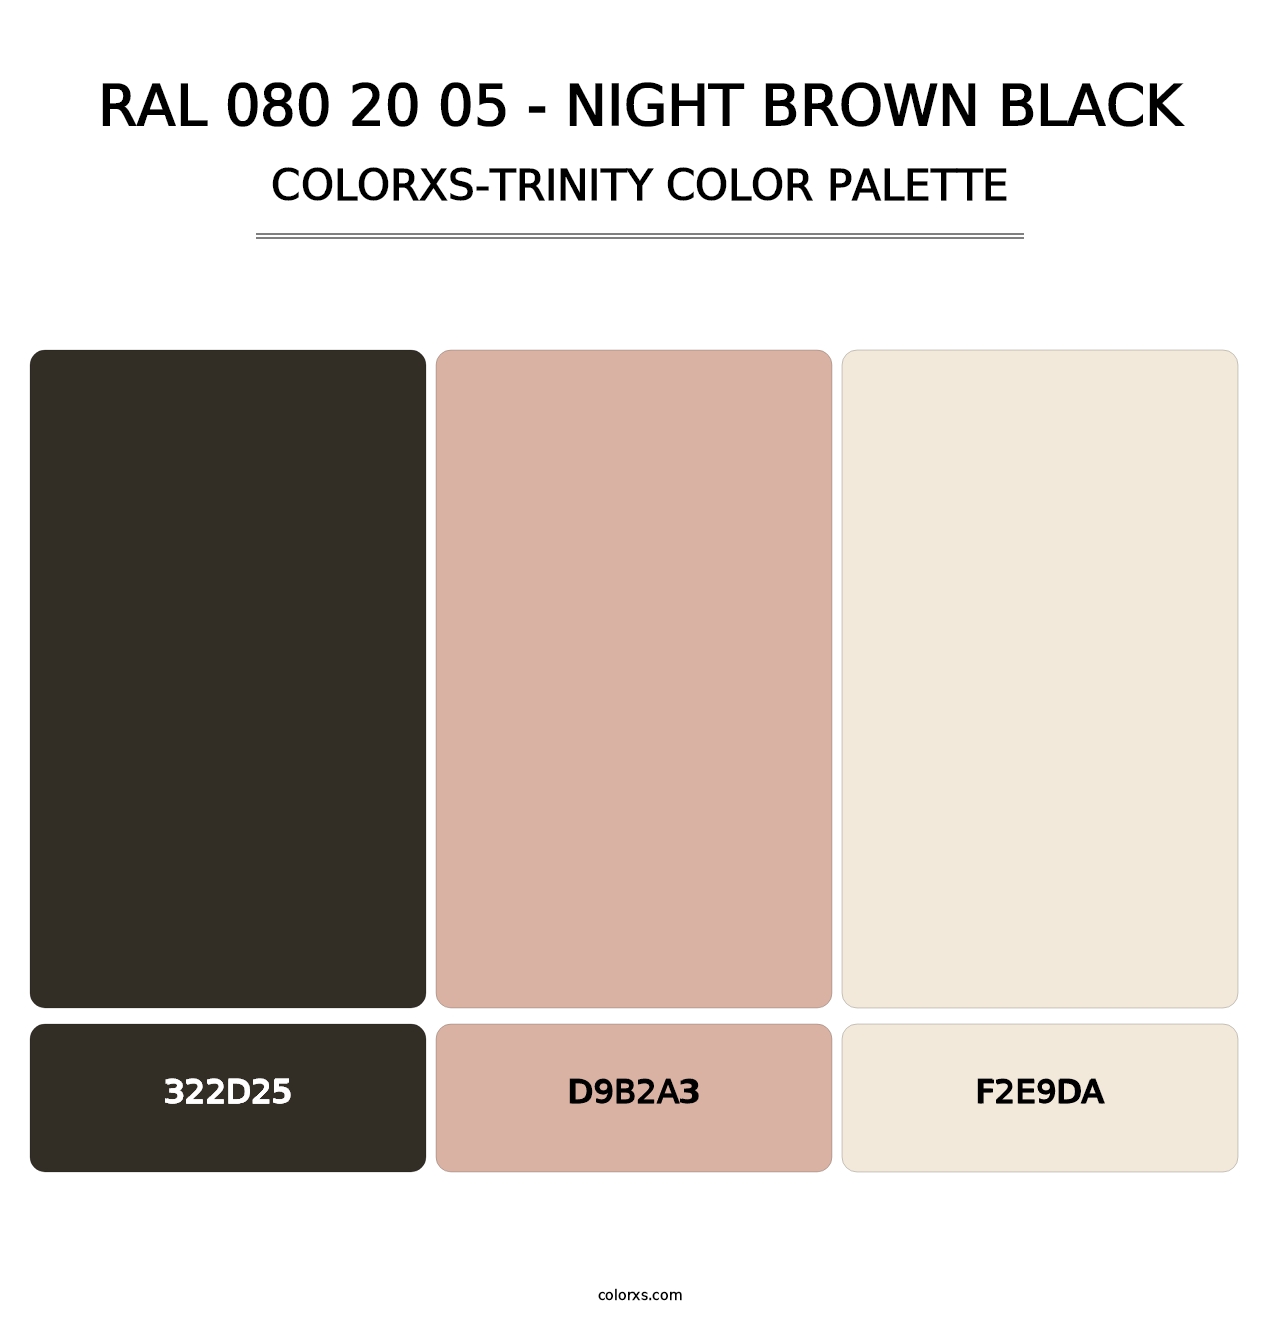 RAL 080 20 05 - Night Brown Black - Colorxs Trinity Palette